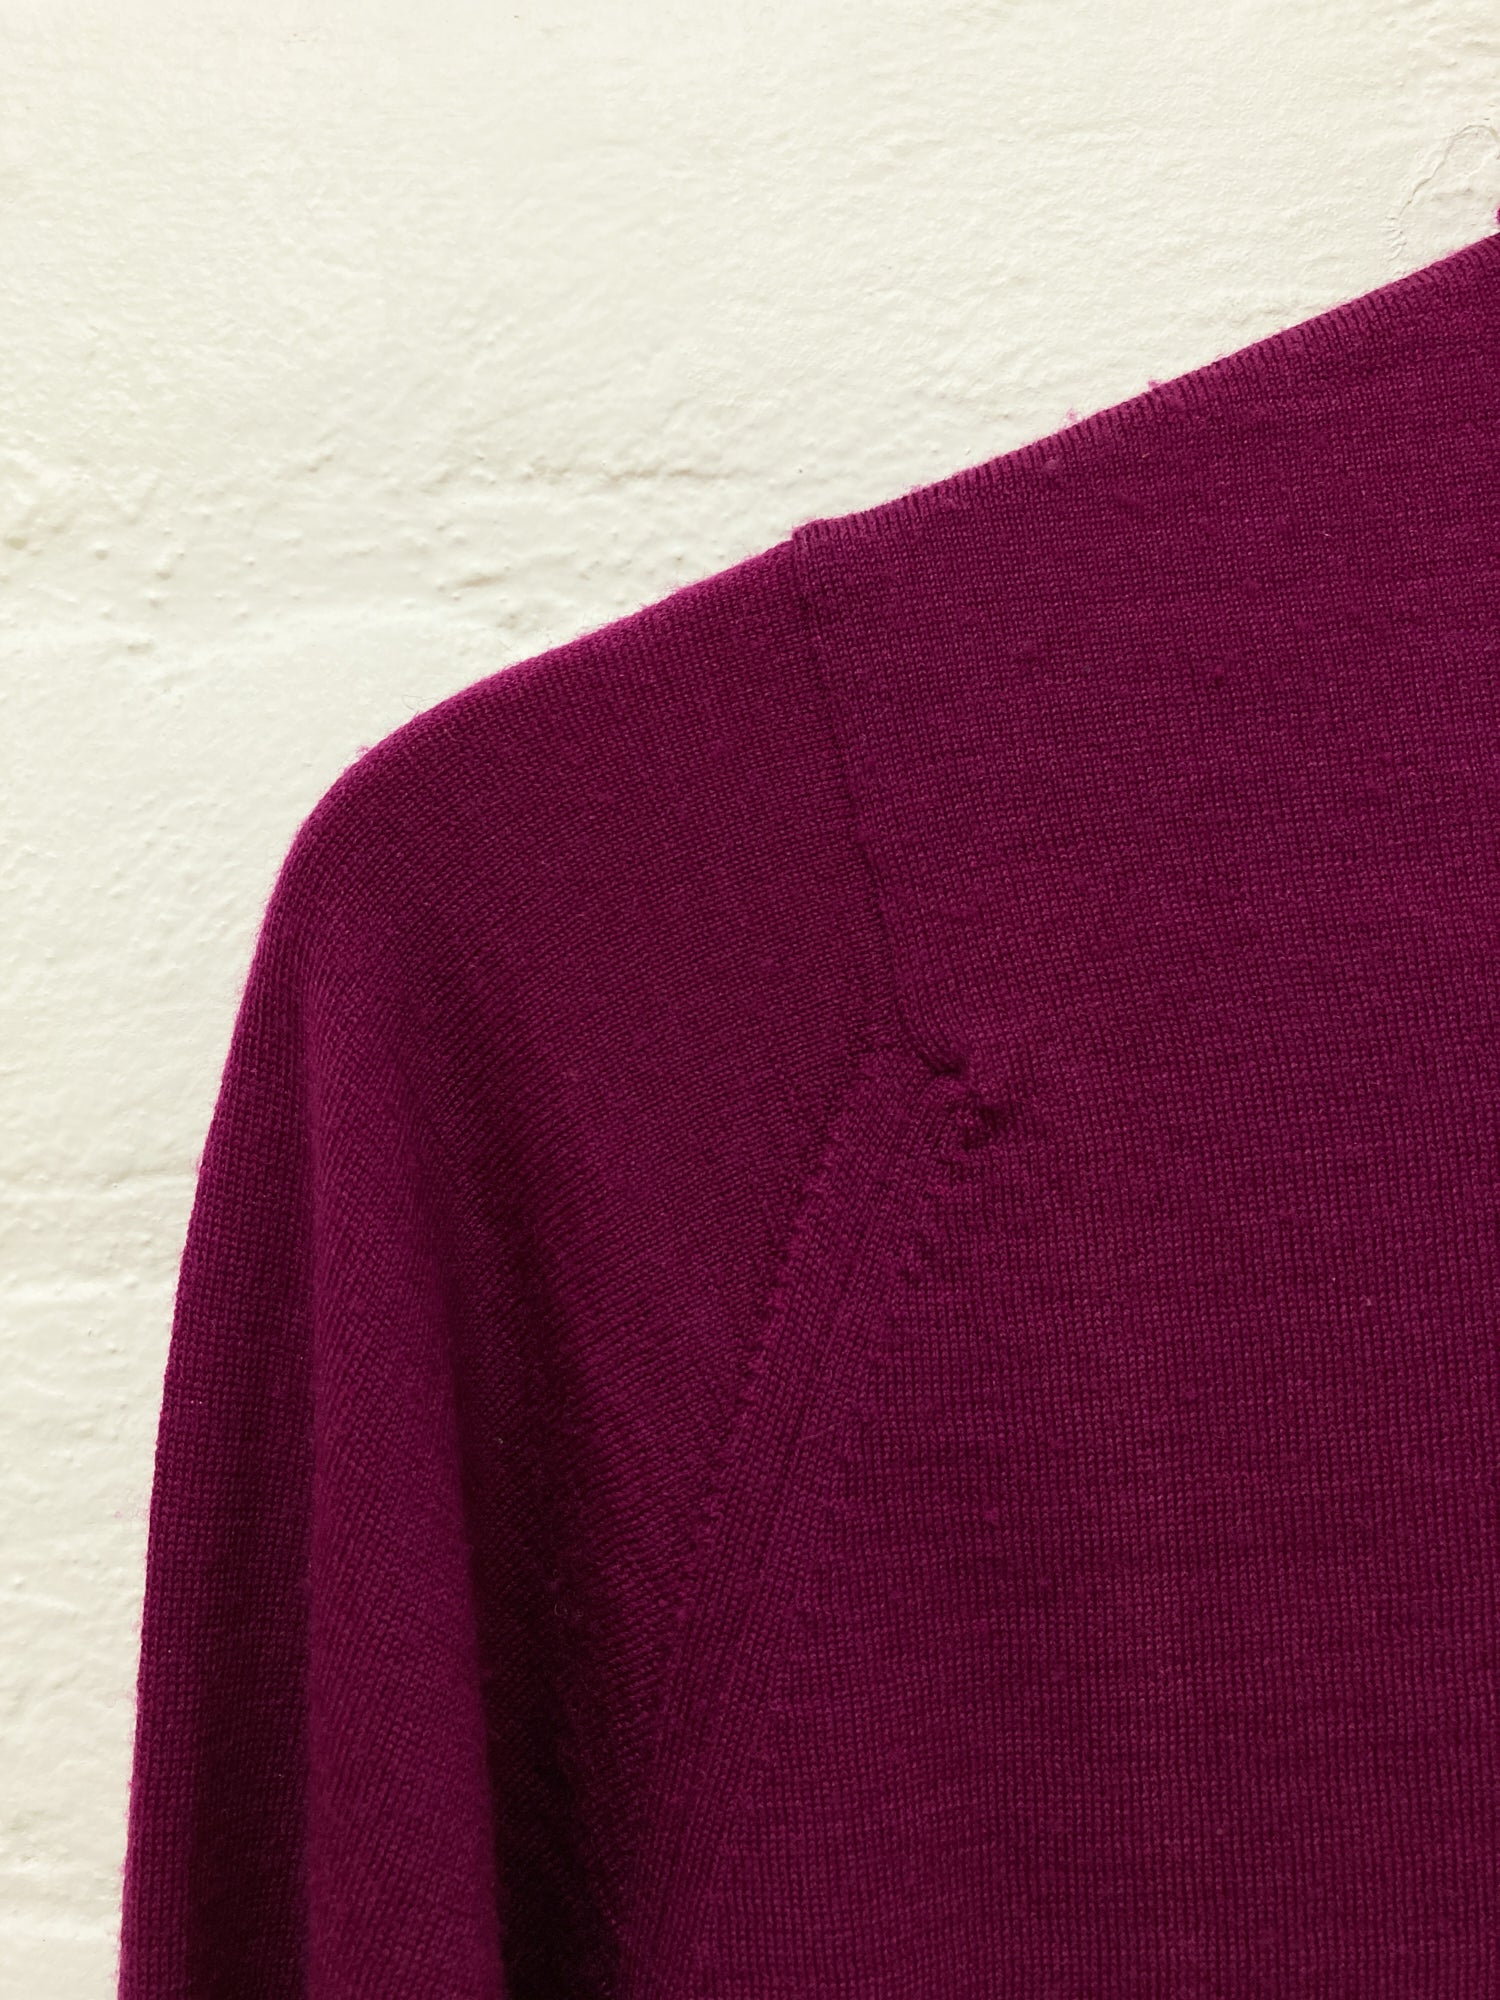 John Smedley pinkish-purple wool knit point collar cardigan - womens XS S